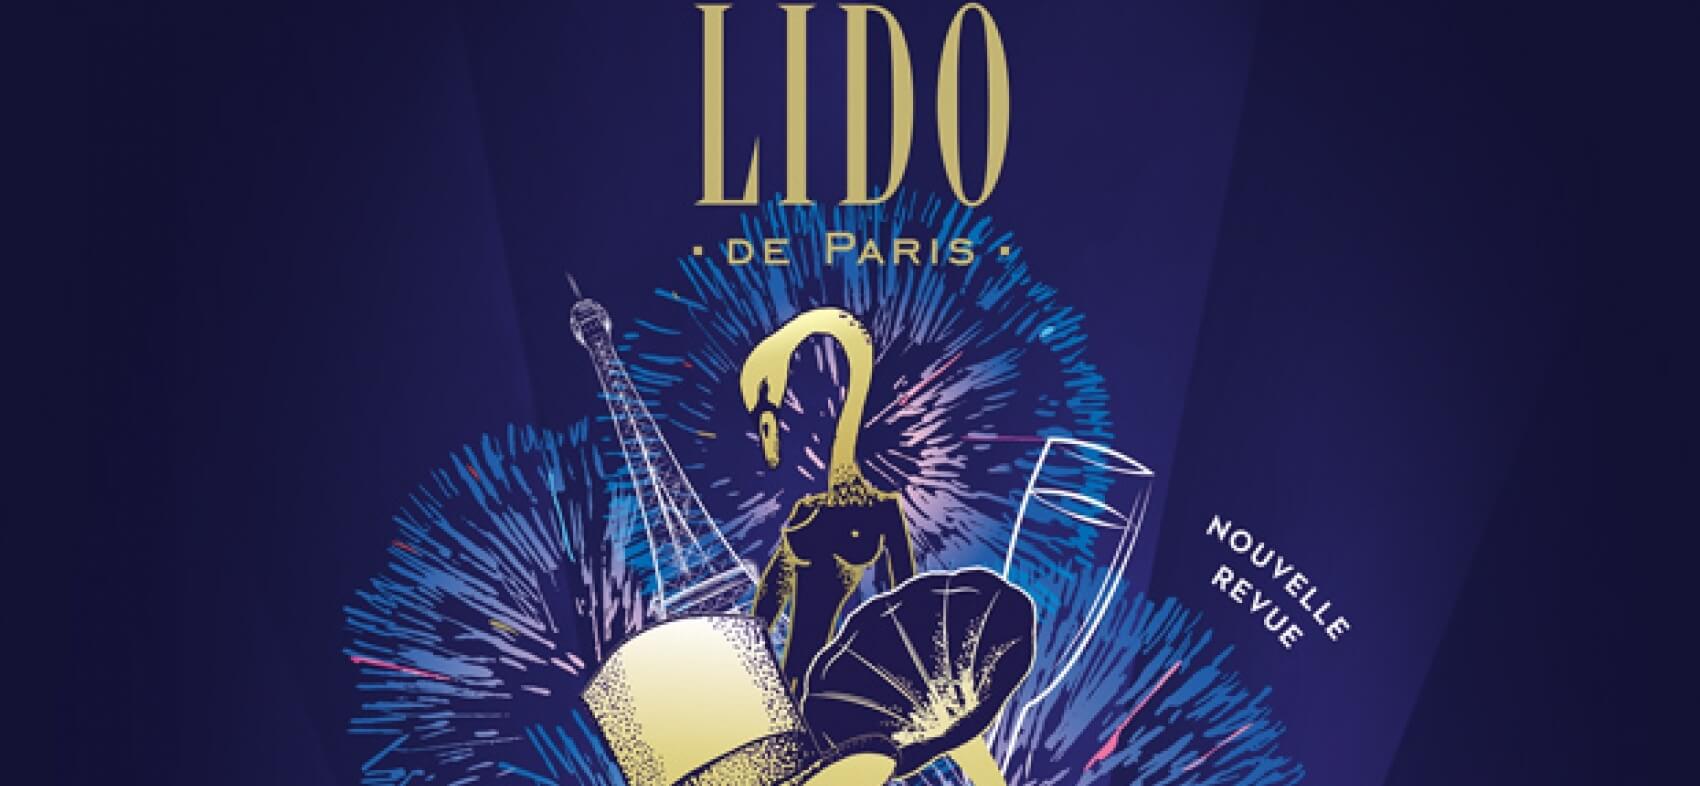 Lido et illuminations de Paris